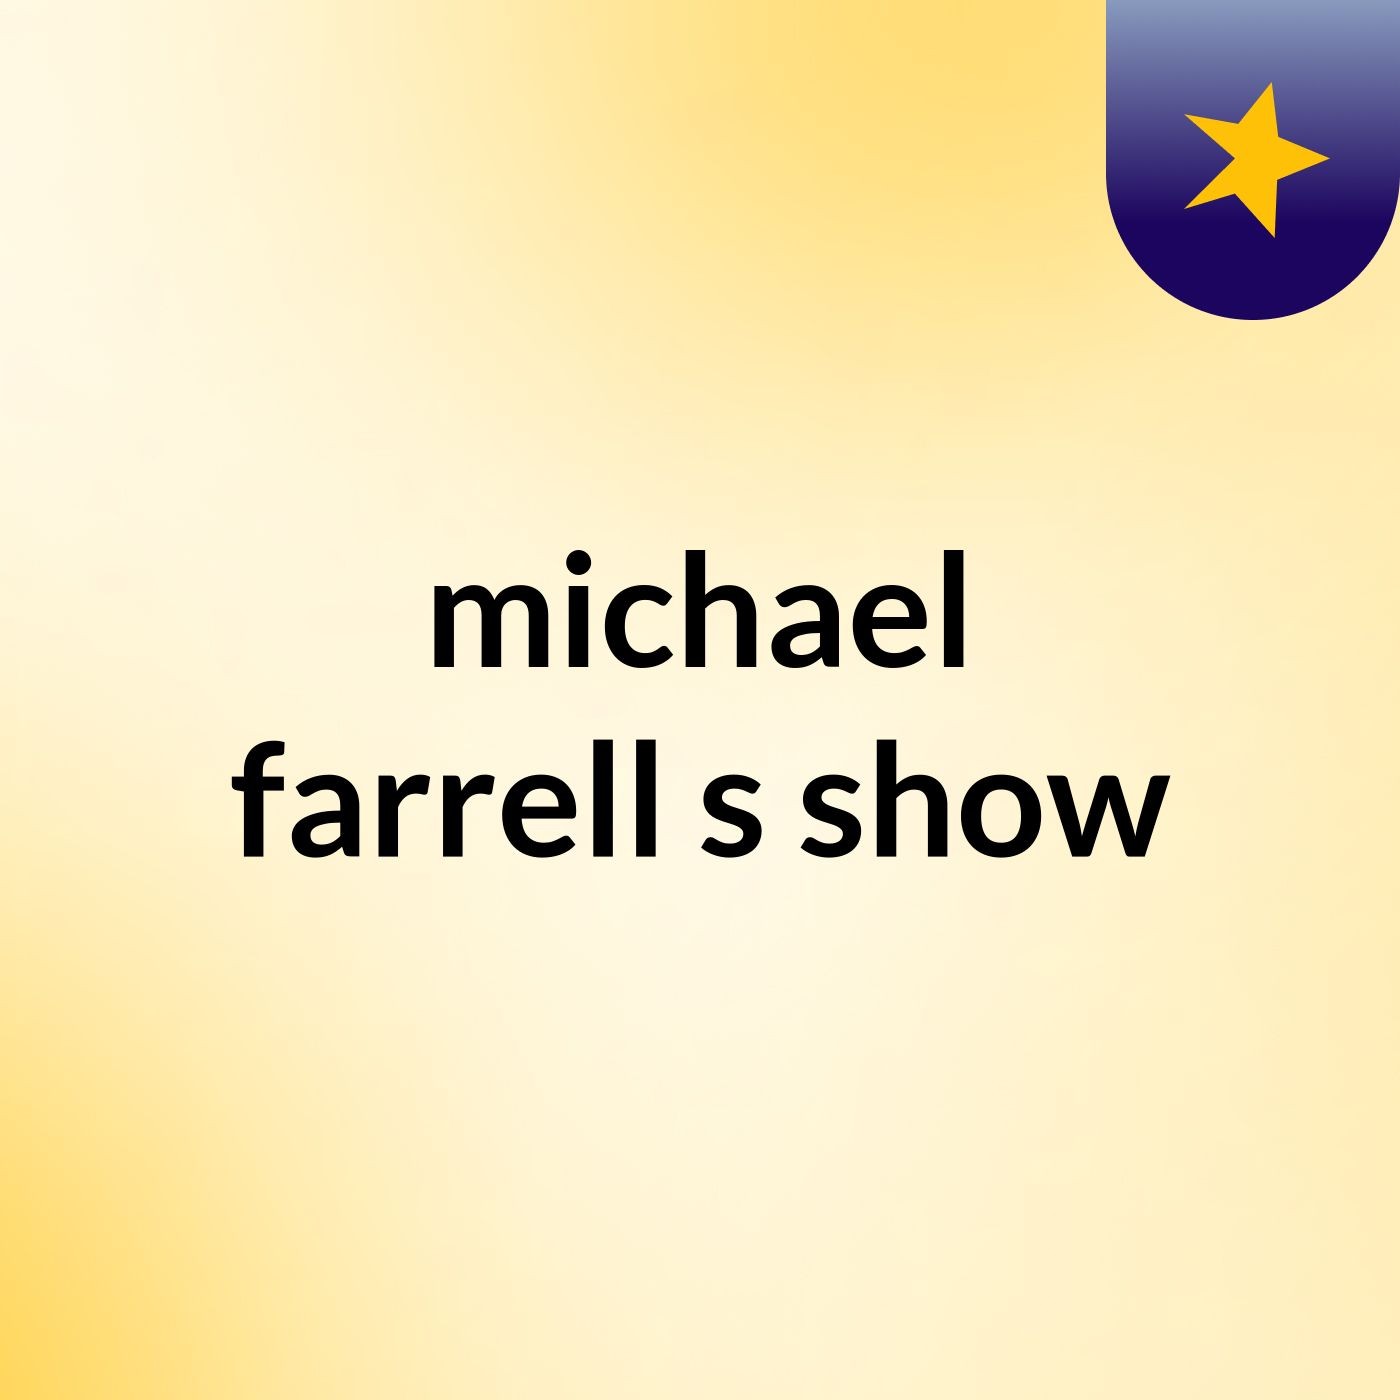 michael farrell's show